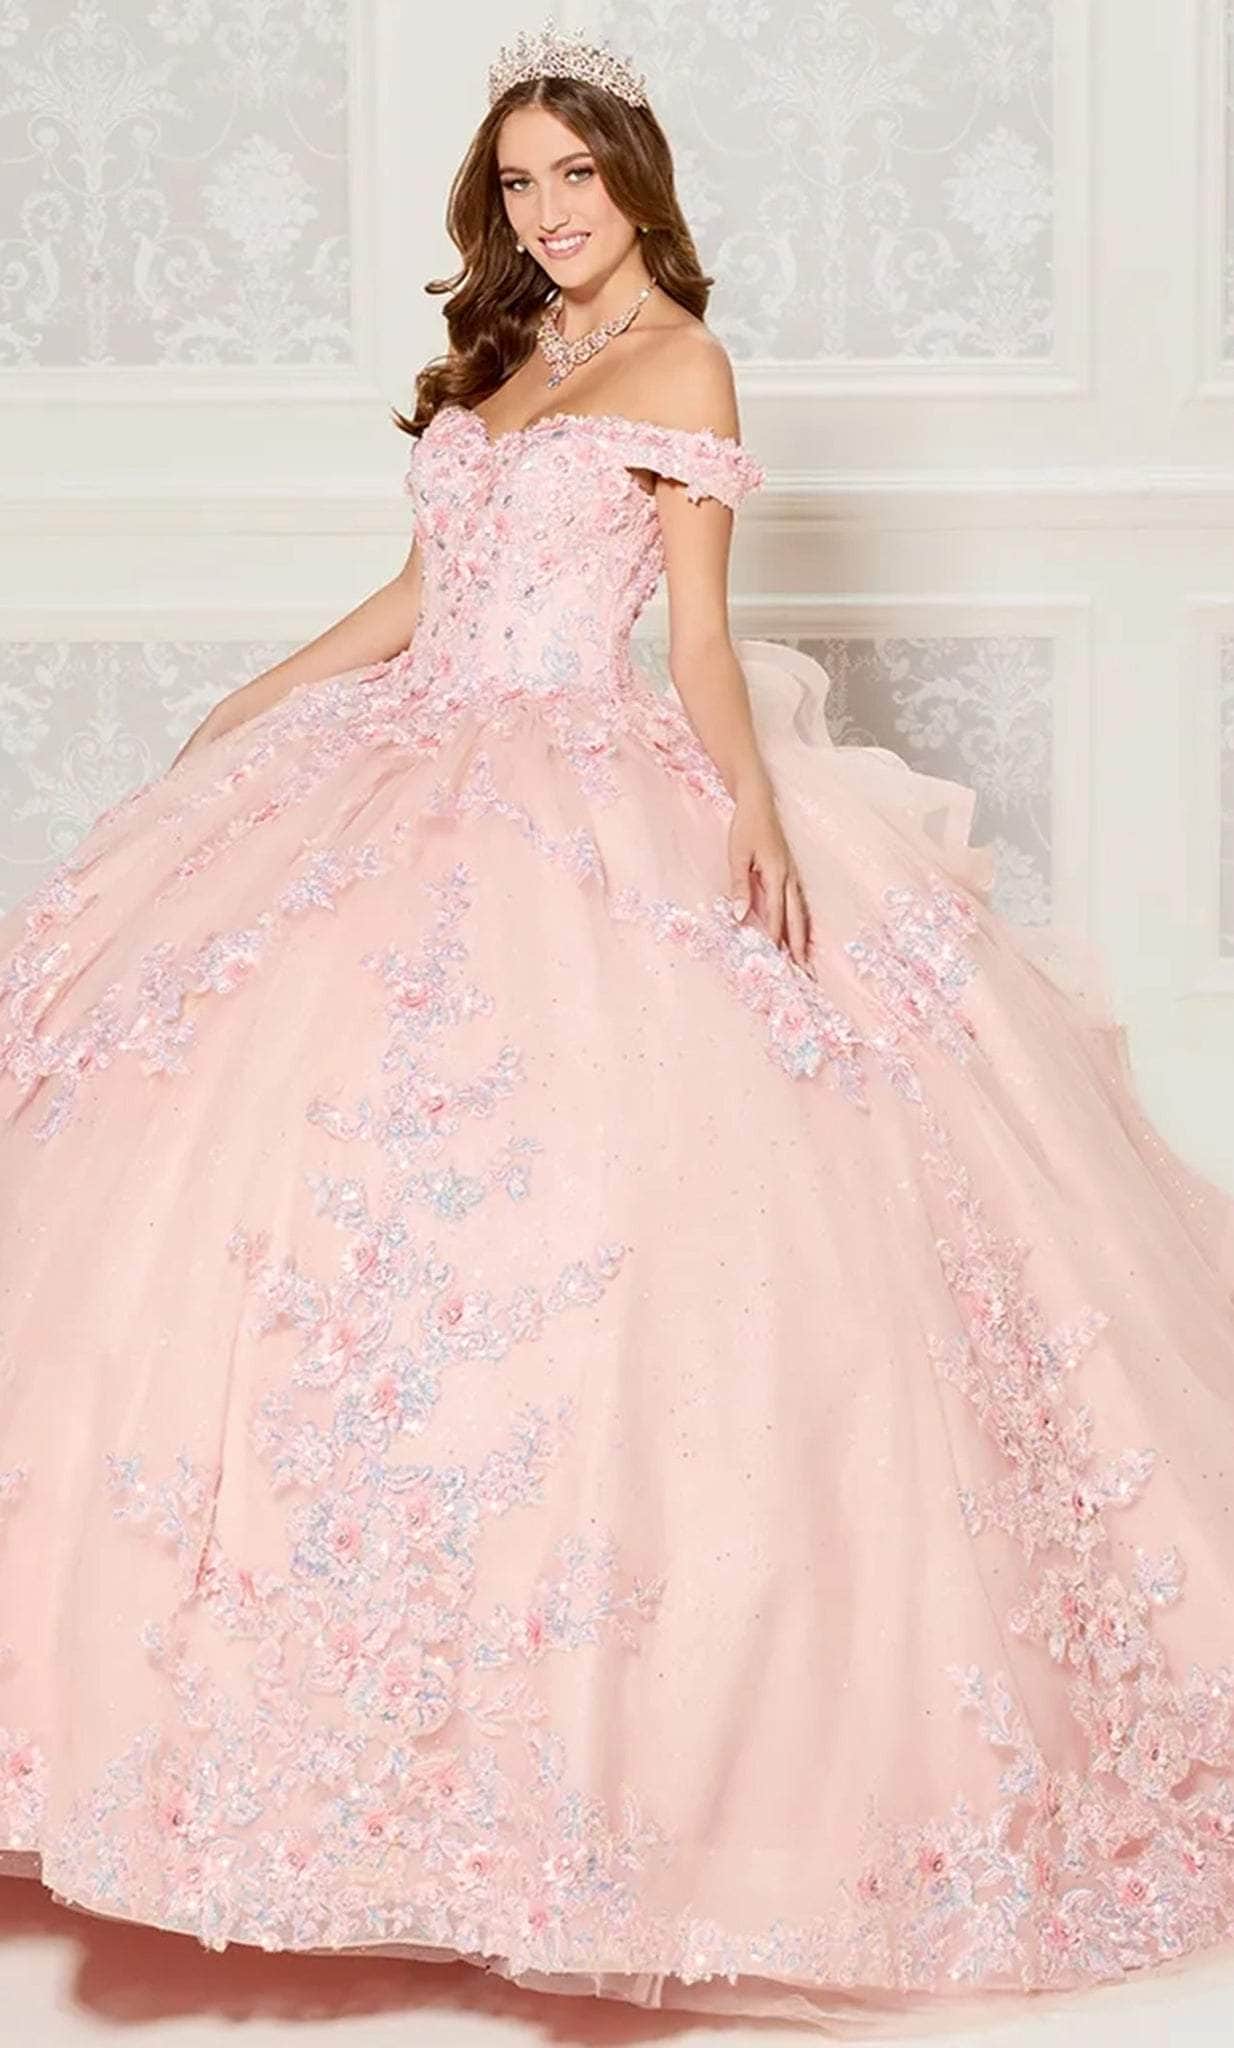 Princesa by Ariana Vara PR30116 - Floral Ruffled Back Ballgown
